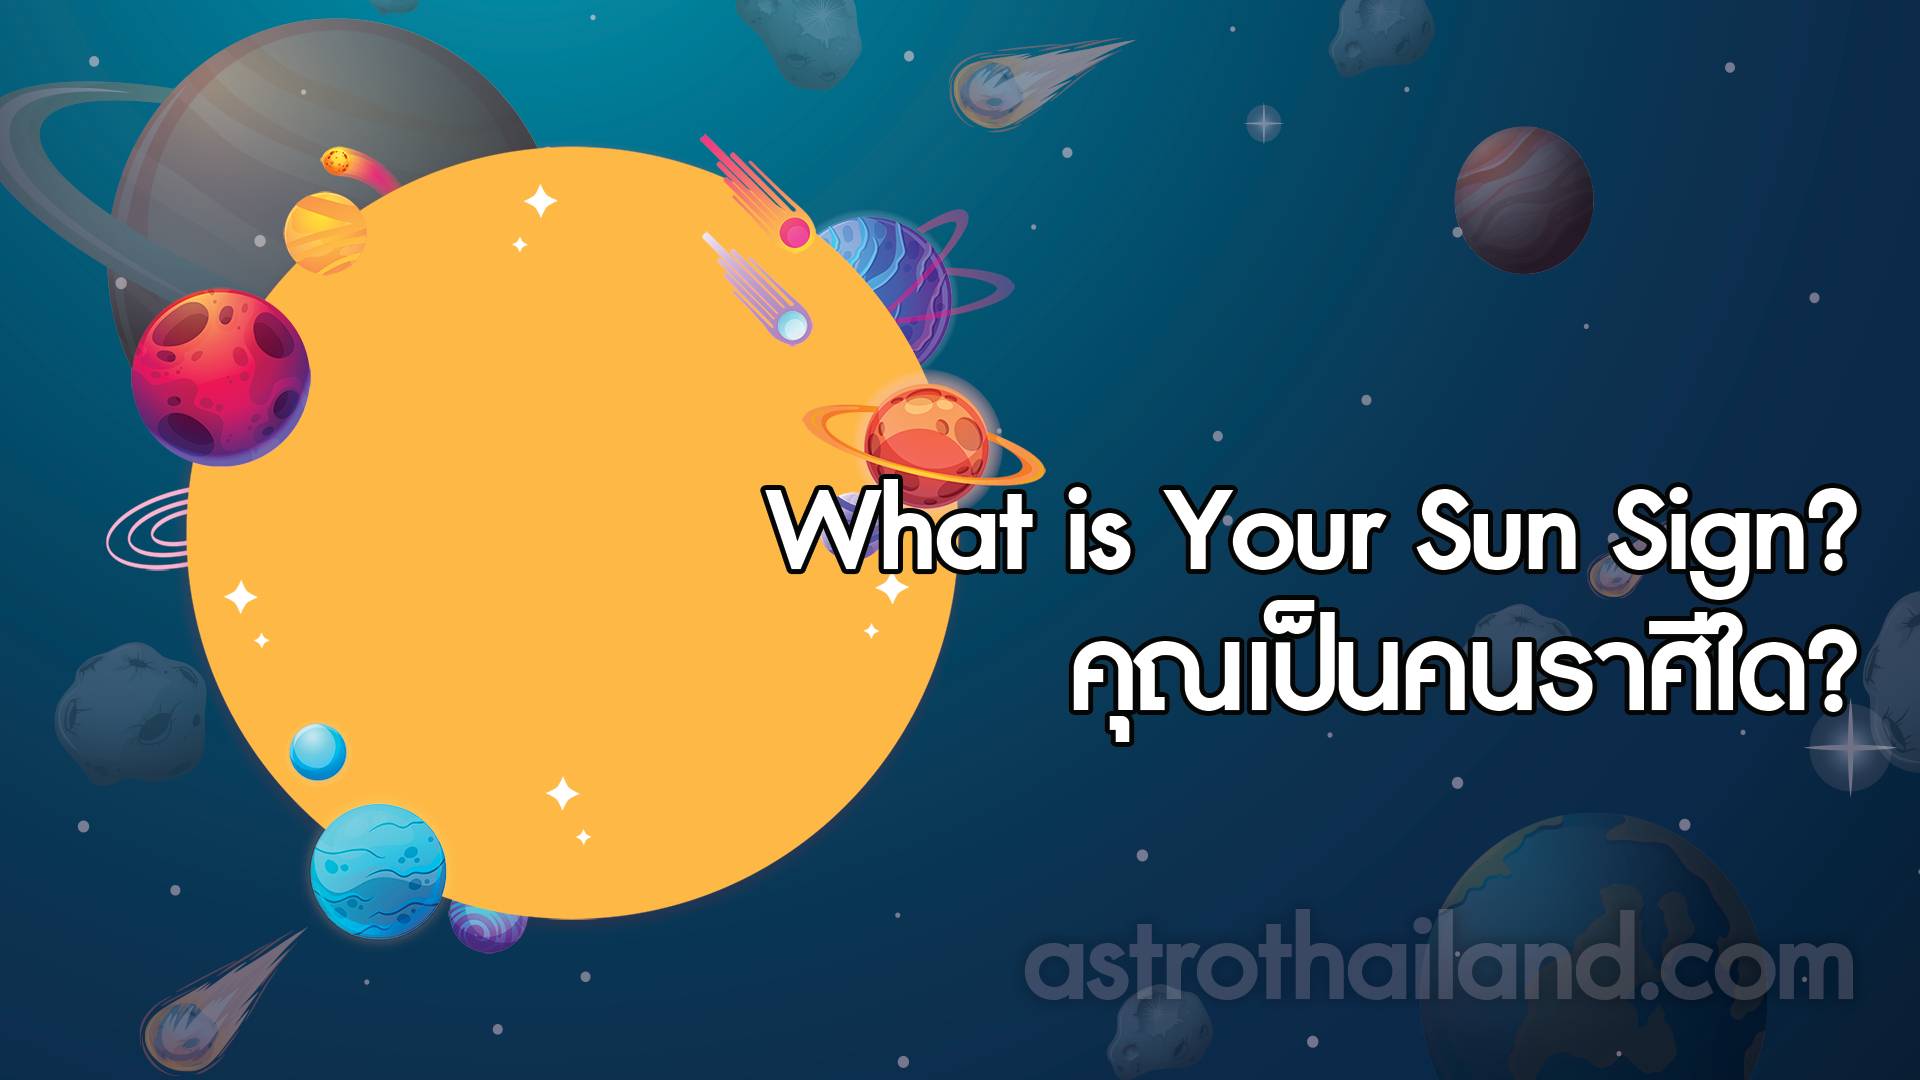 astrothailand home your sun sign